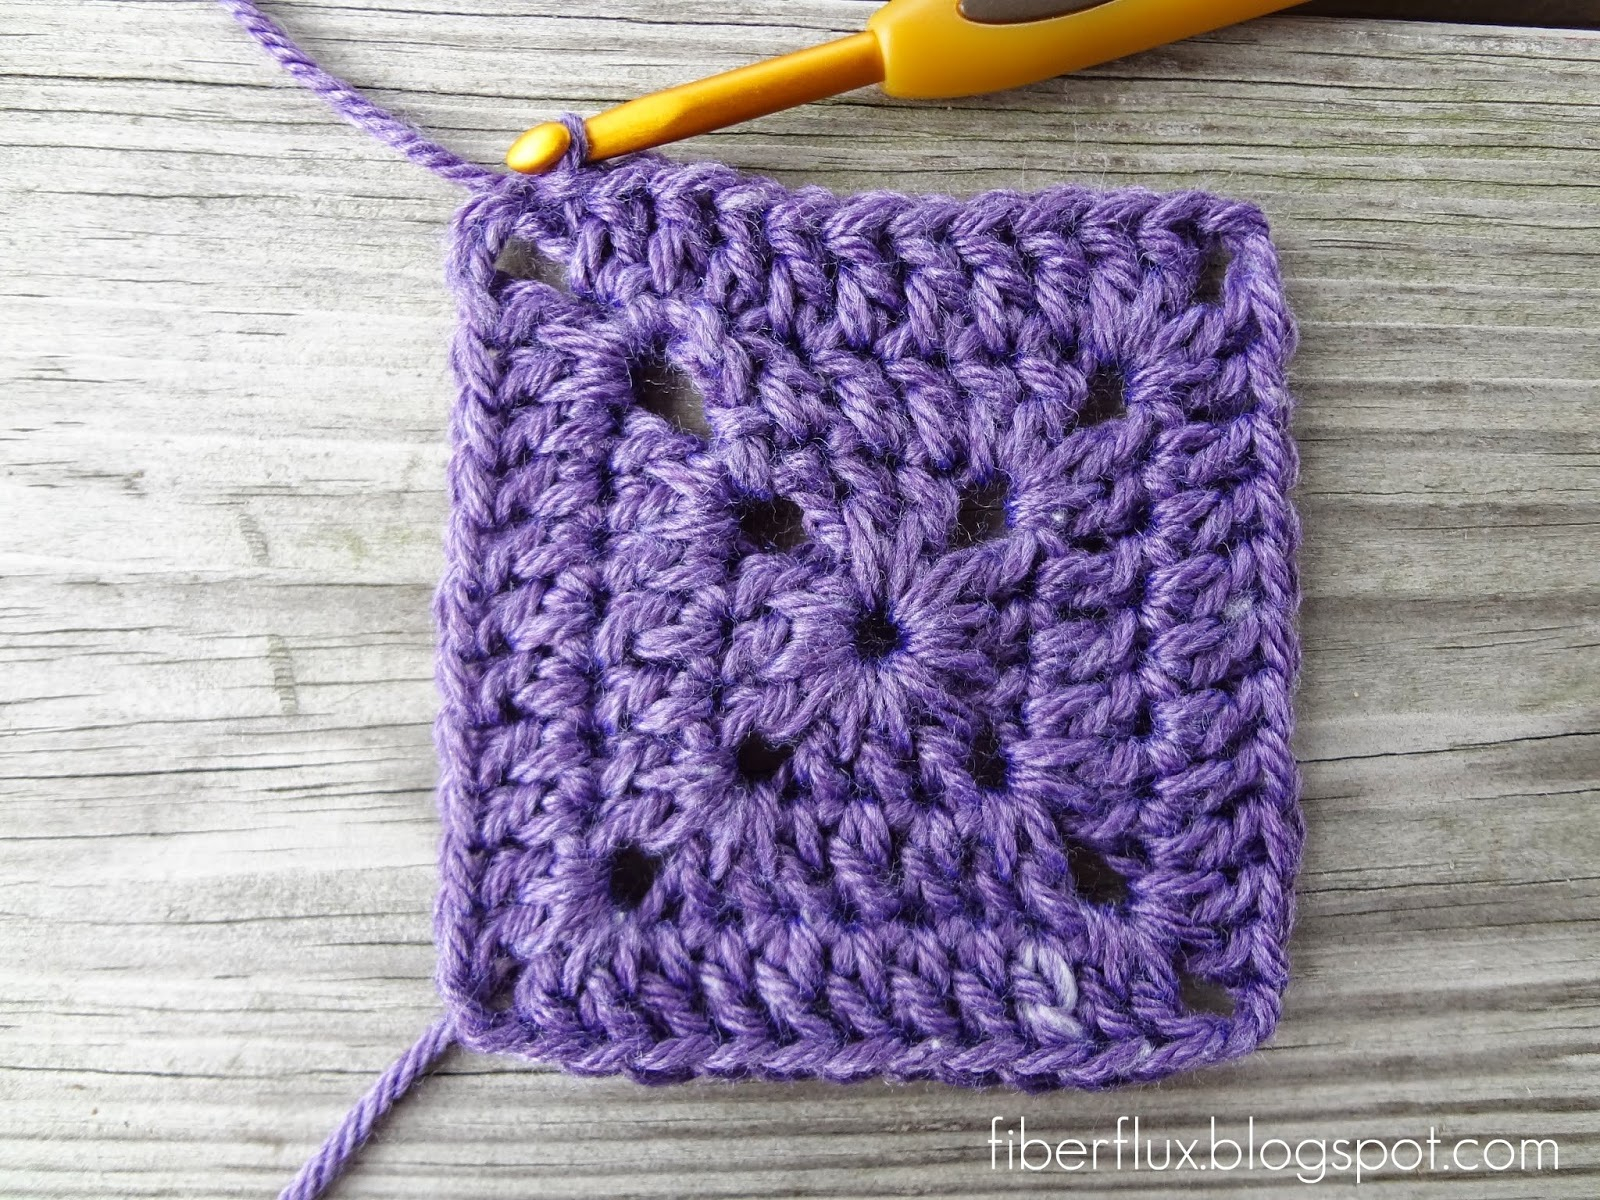 Crochet Granny Square Pattern Fiber Flux How To Crochet A Solid Granny Square